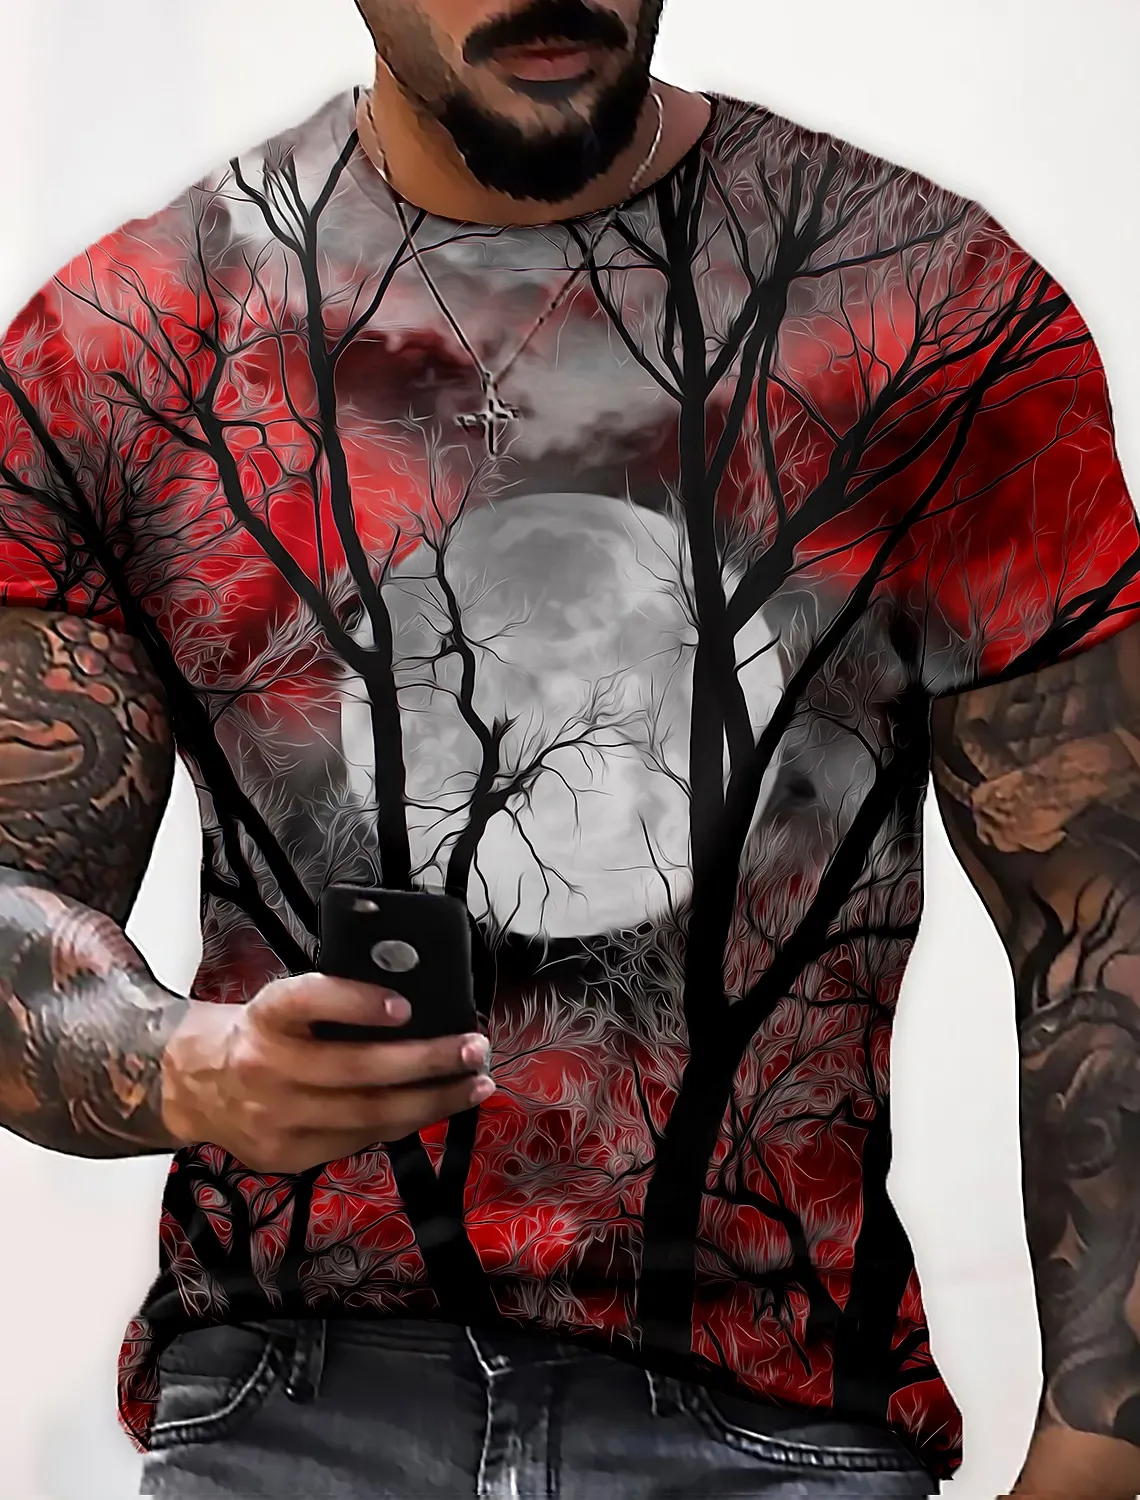 Men's Unisex T shirt Tee Moon Graphic Prints Crew Neck 3D Pr